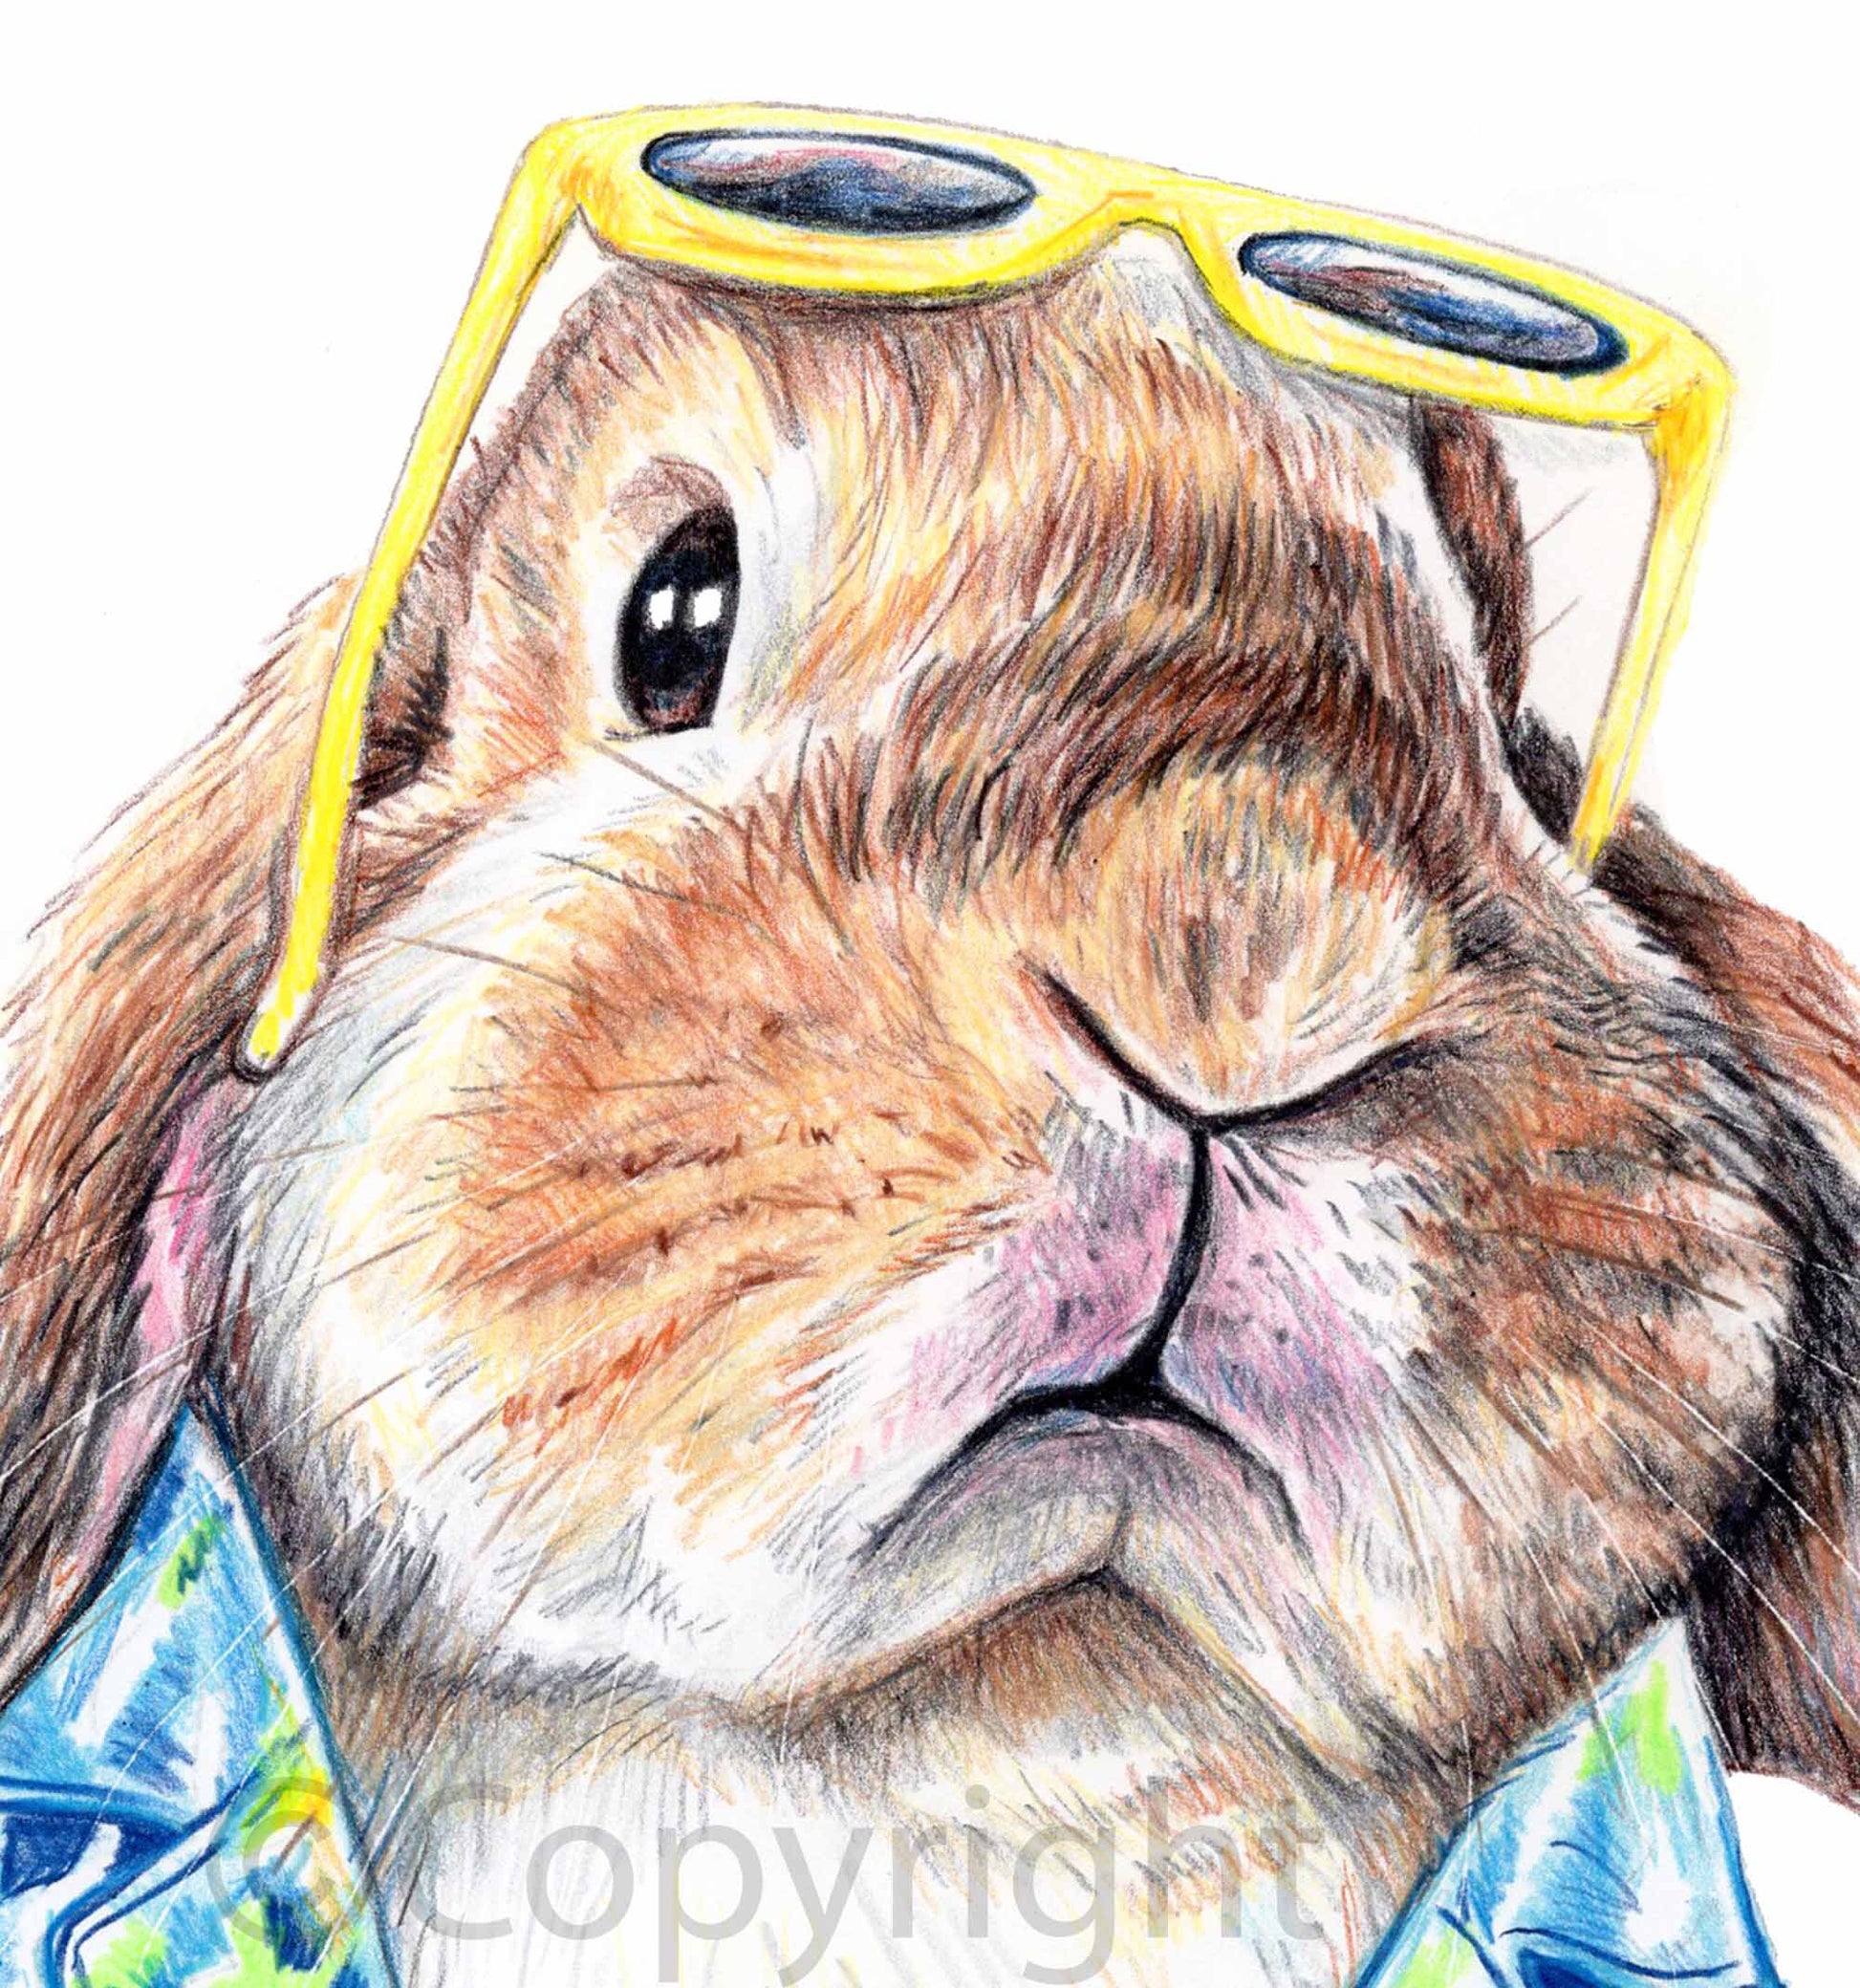 Print of drawing of a lop eared bunny rabbit wearing a Hawaiian shirt. Original crayon pastel drawing by Deidre Wicks